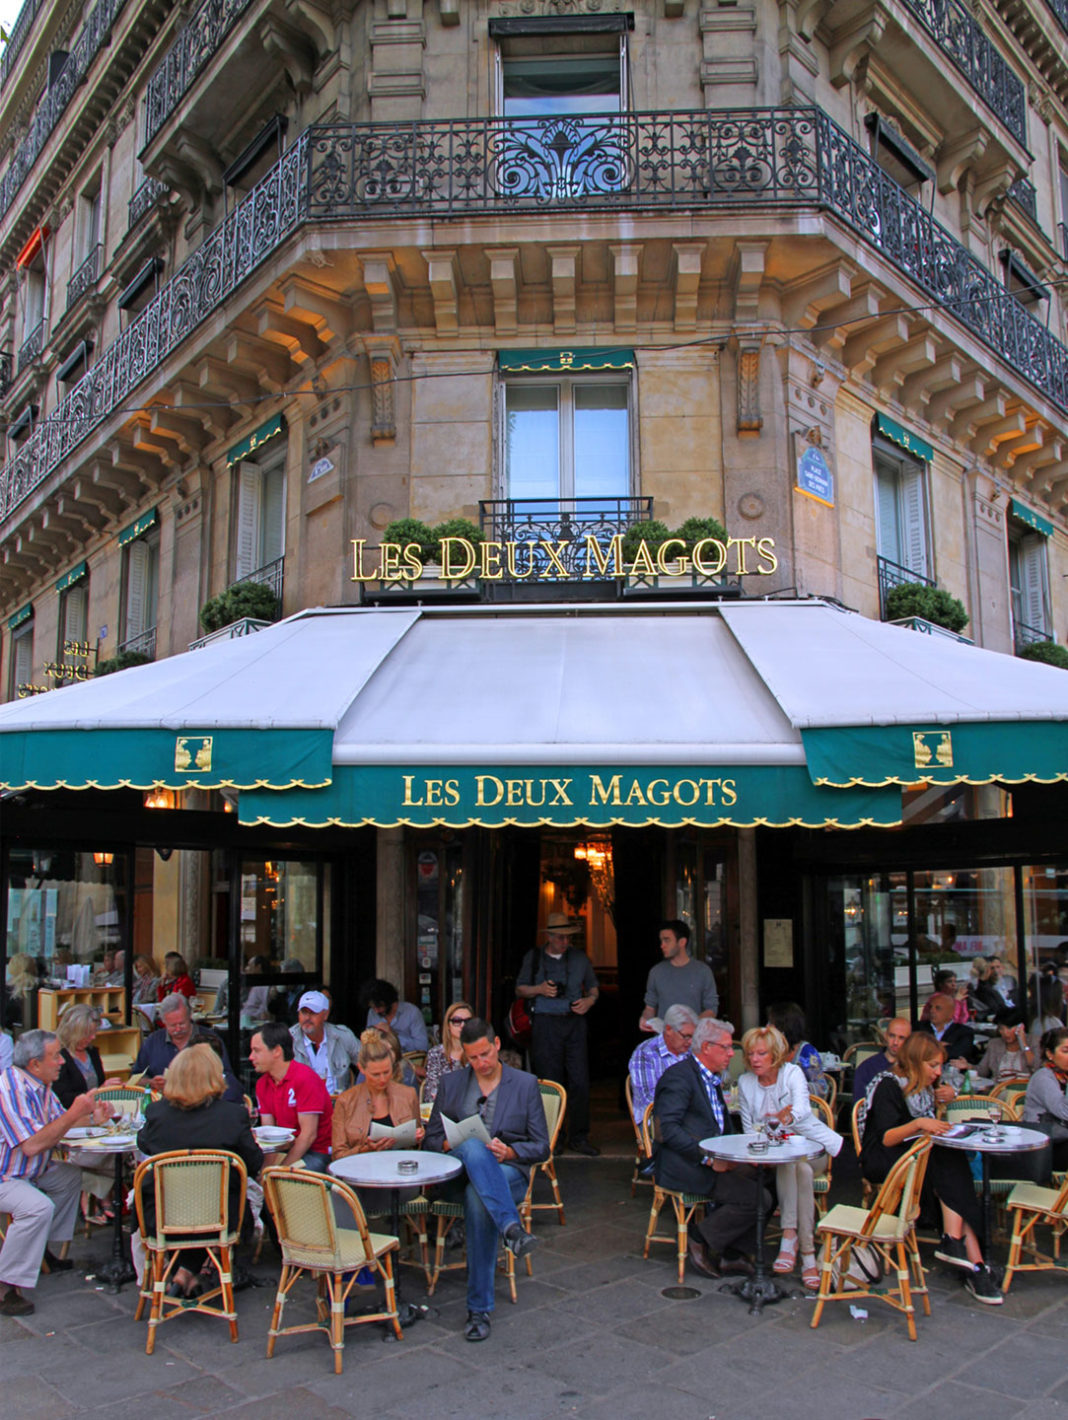 Café Culture in Paris Lives Up to the Hype - Ann Cavitt Fisher